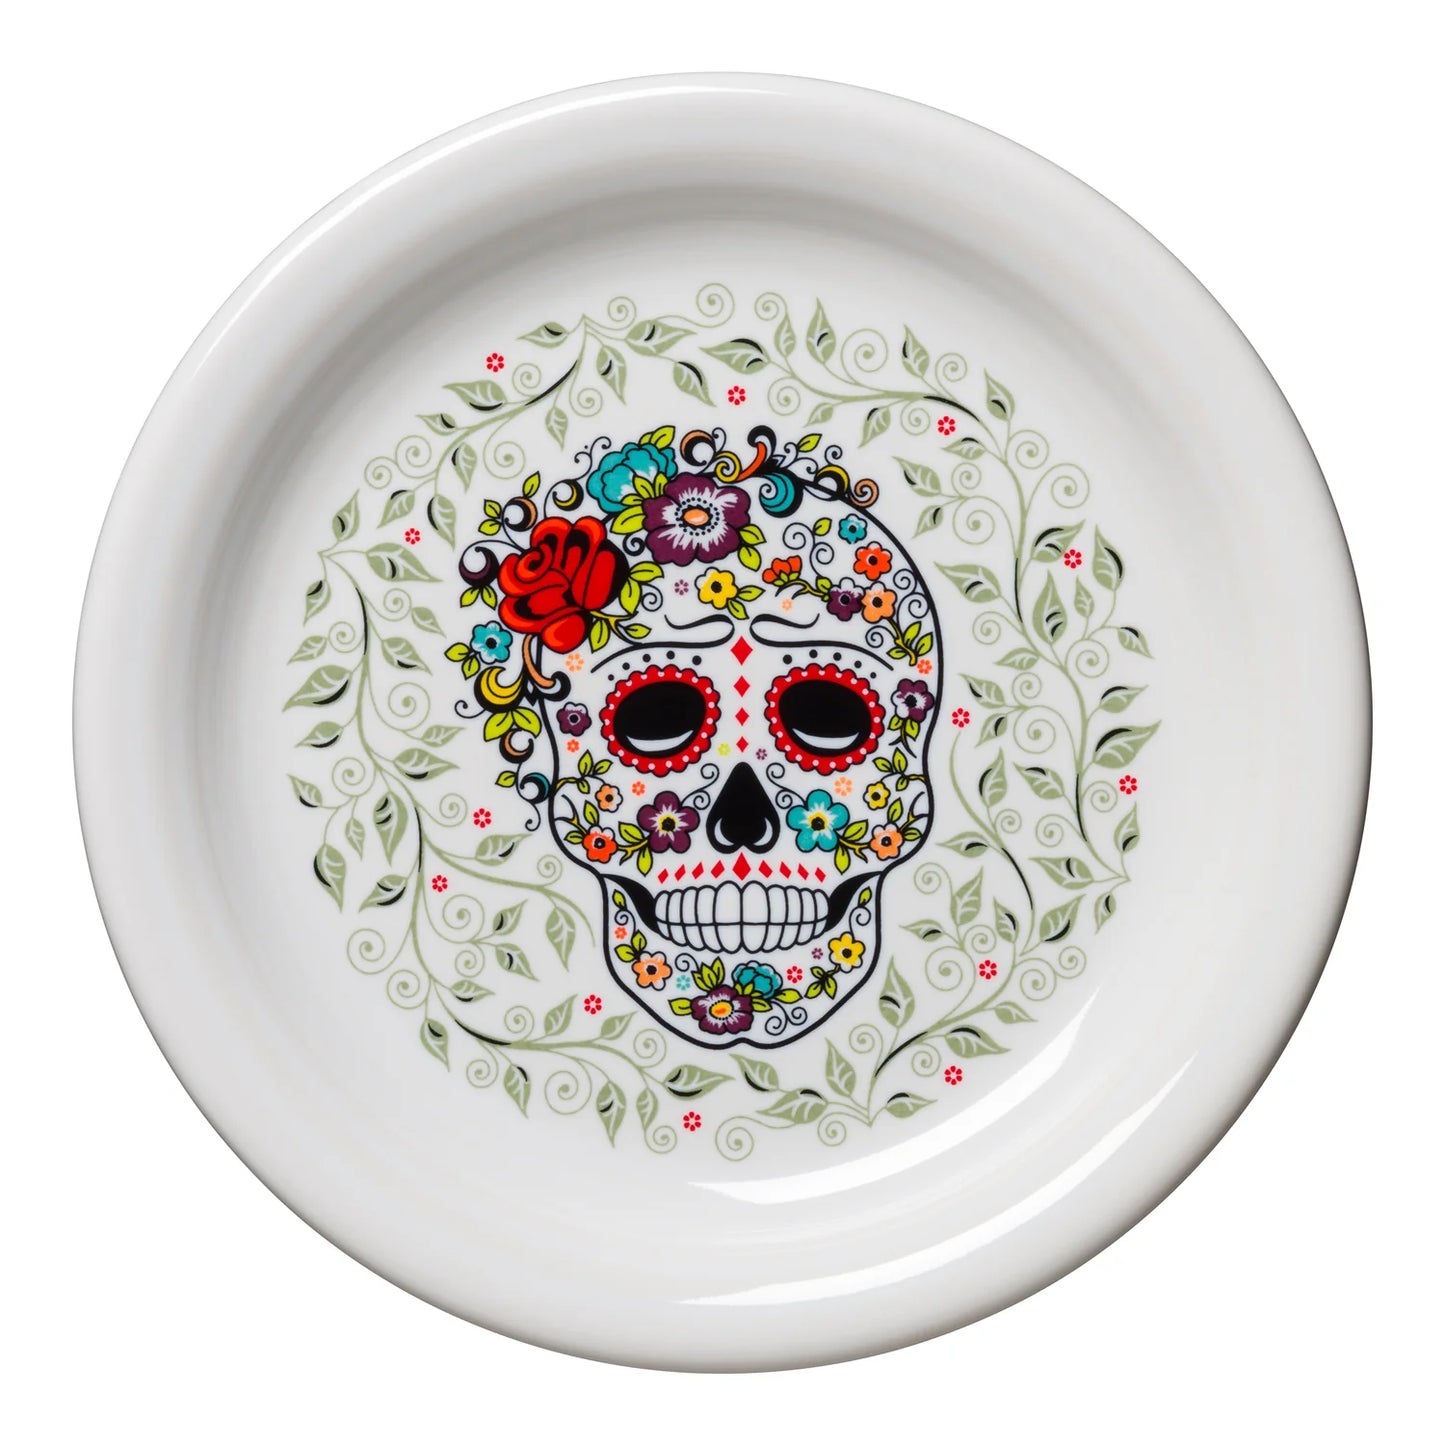 Fiesta® Appetizer Plate  - Skull and Vine Sugar